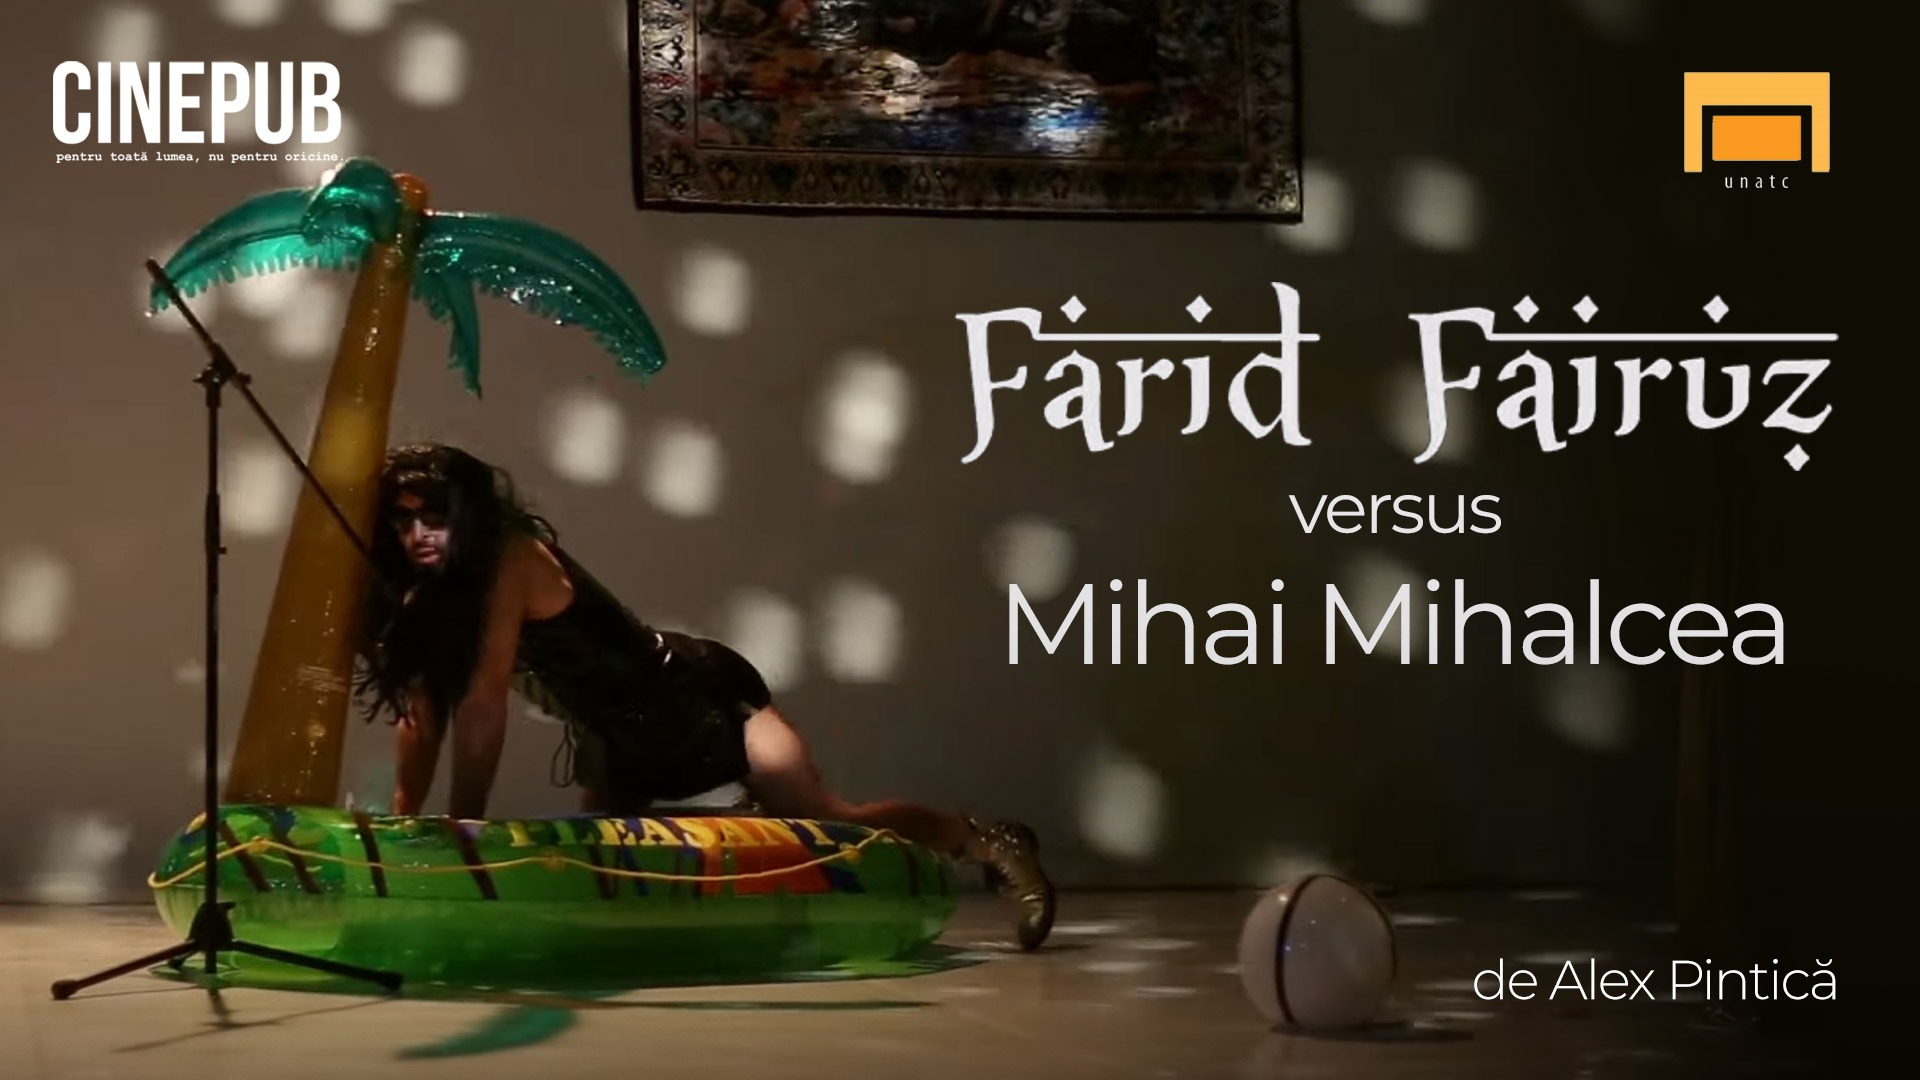 Farid Fairuz vs Mihai Mihalcea - documentary online on CINEPUB